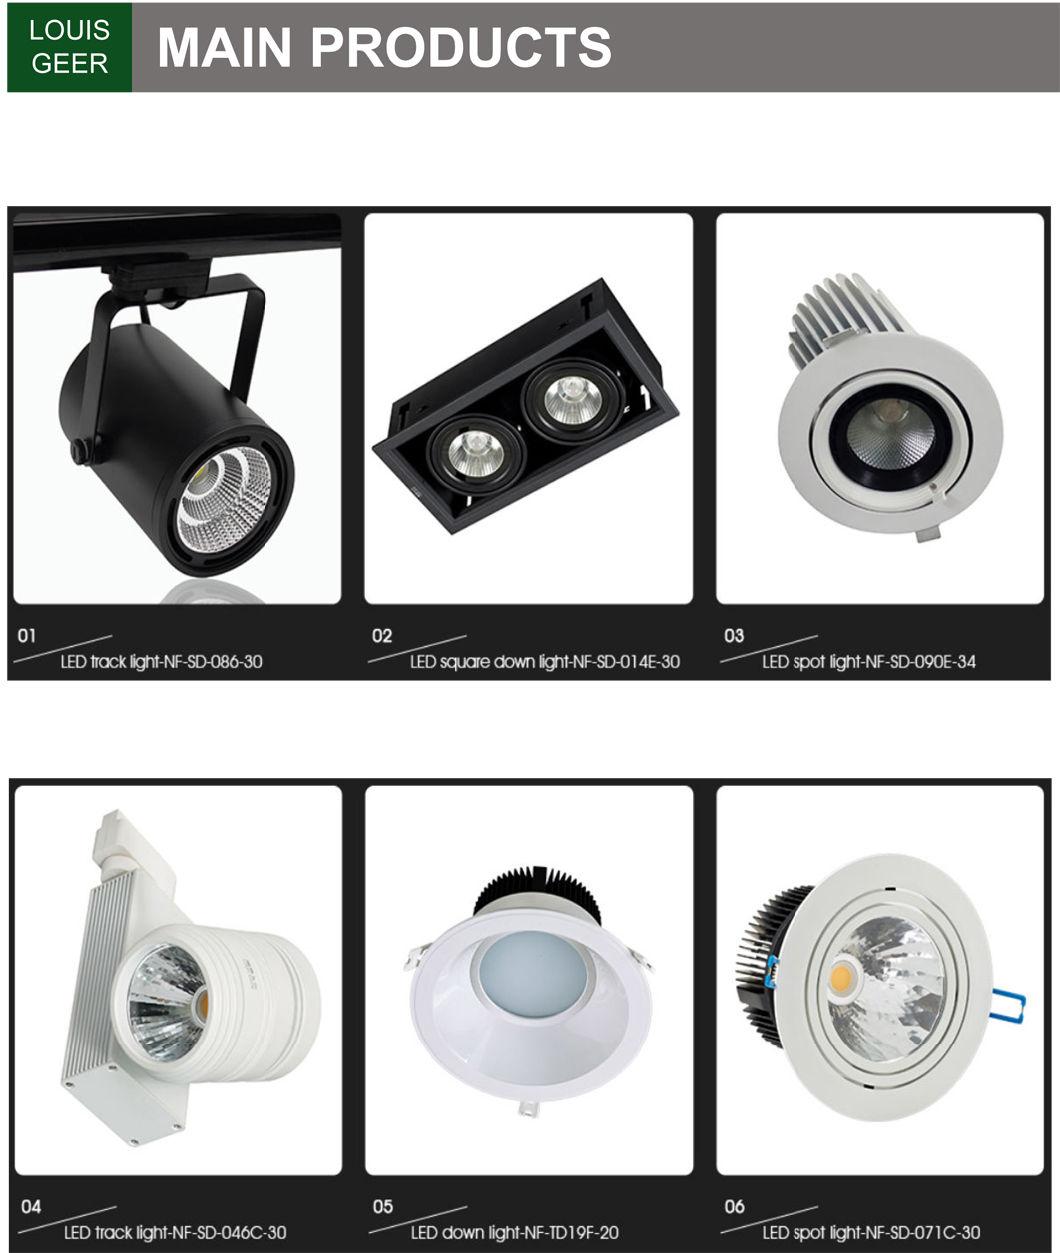 Top Performance 30W Black Heatsink Housing LED Track Lighting Adjustable Beam Focus for Musuem/Shop/Retail